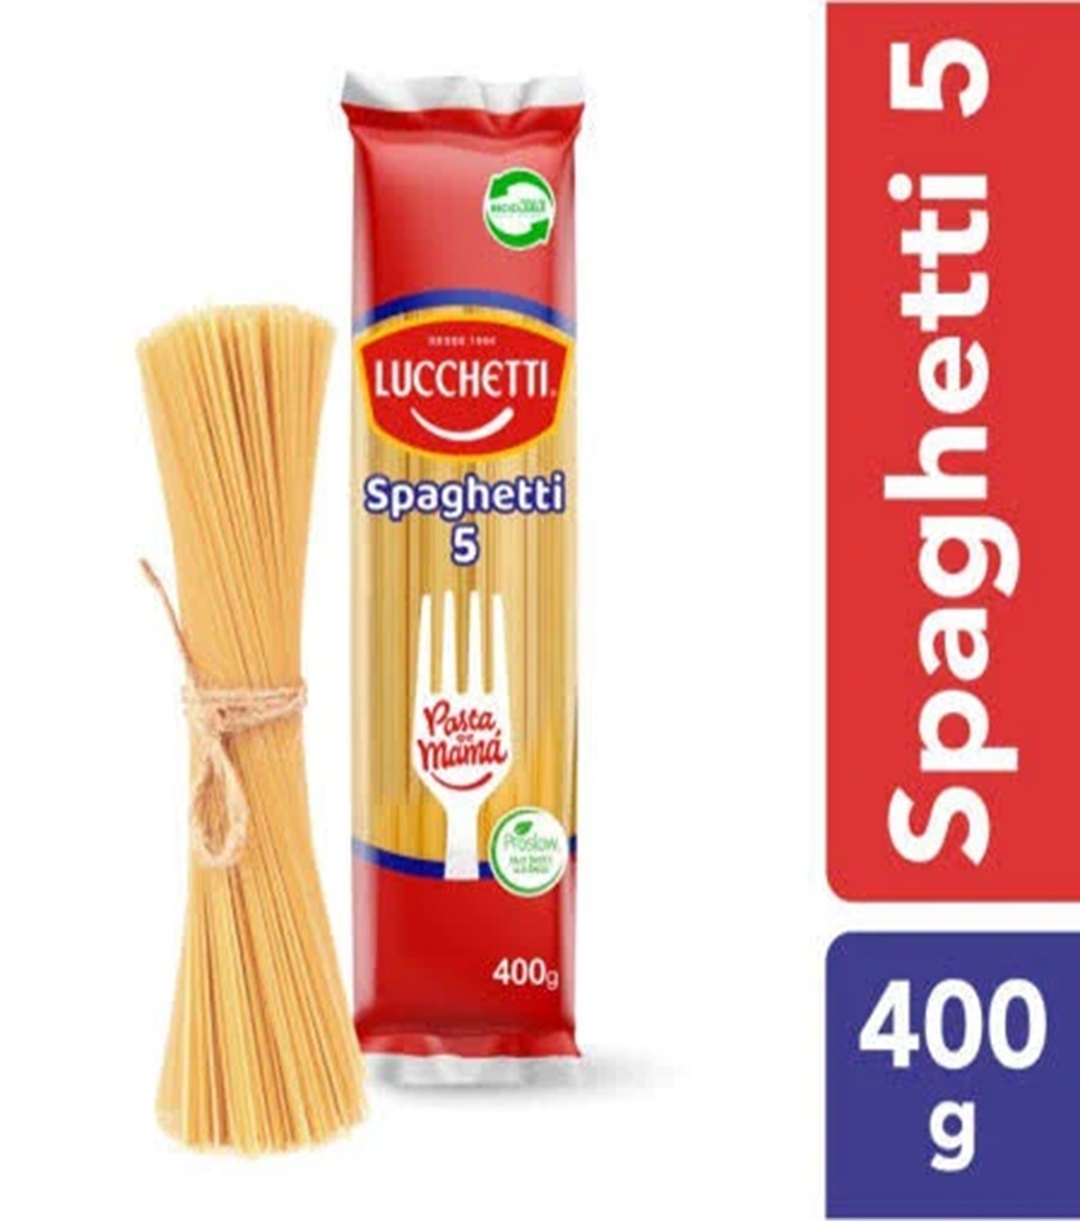 Lucchetti Fideos Spaghetti 5  400 grs